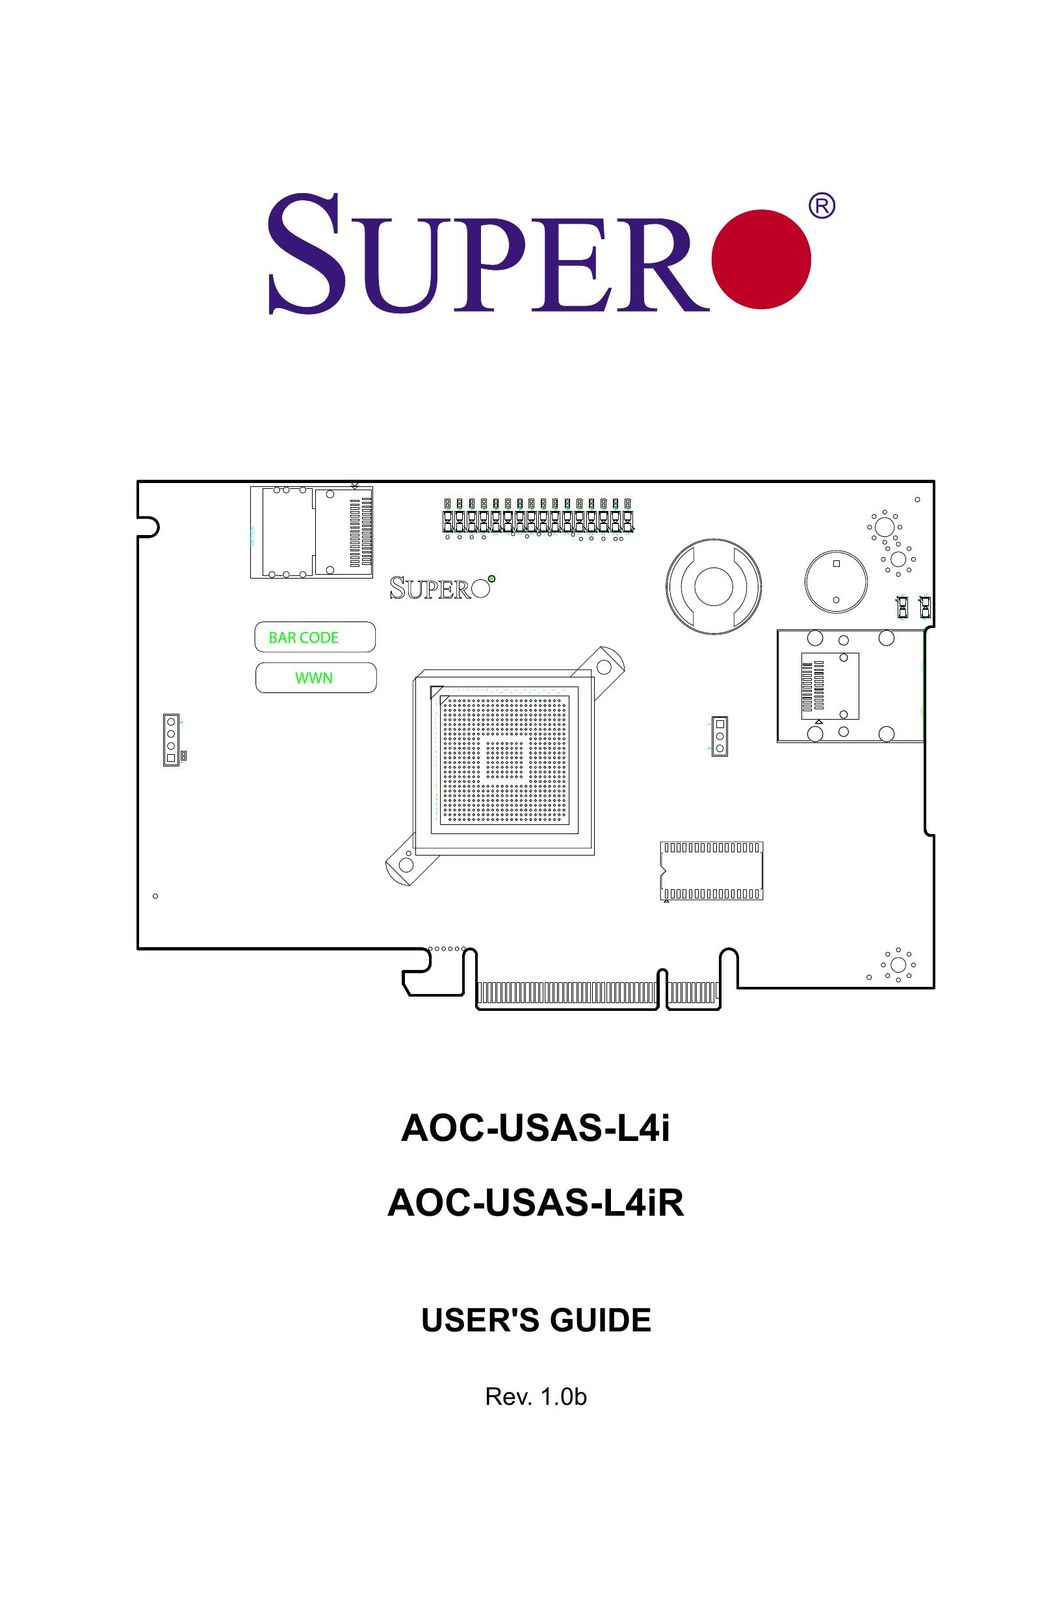 SUPER MICRO Computer AOC-USAS-L4iR Computer Hardware User Manual